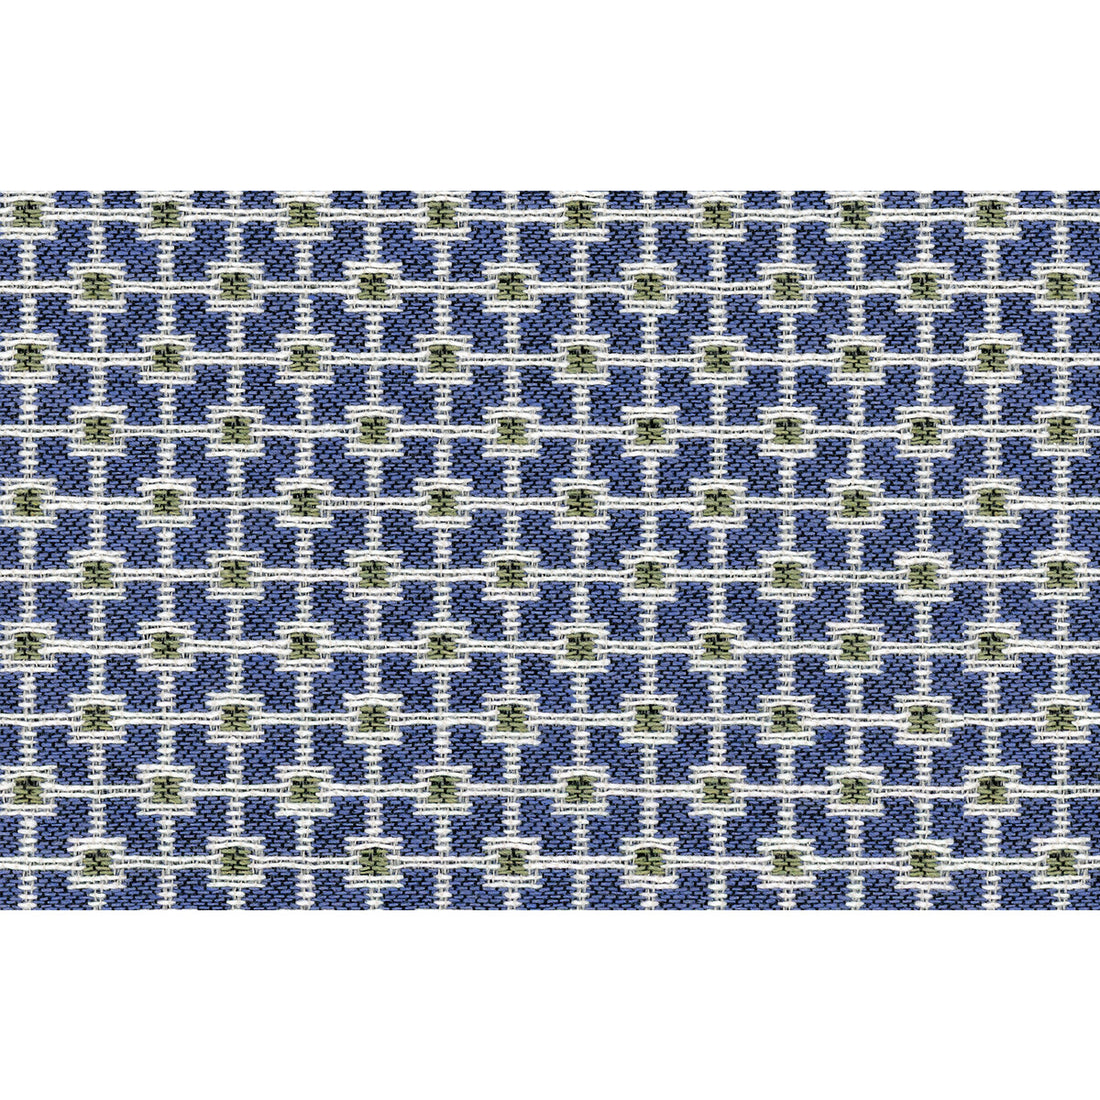 Kravet Smart fabric in 34311-523 color - pattern 34311.523.0 - by Kravet Smart